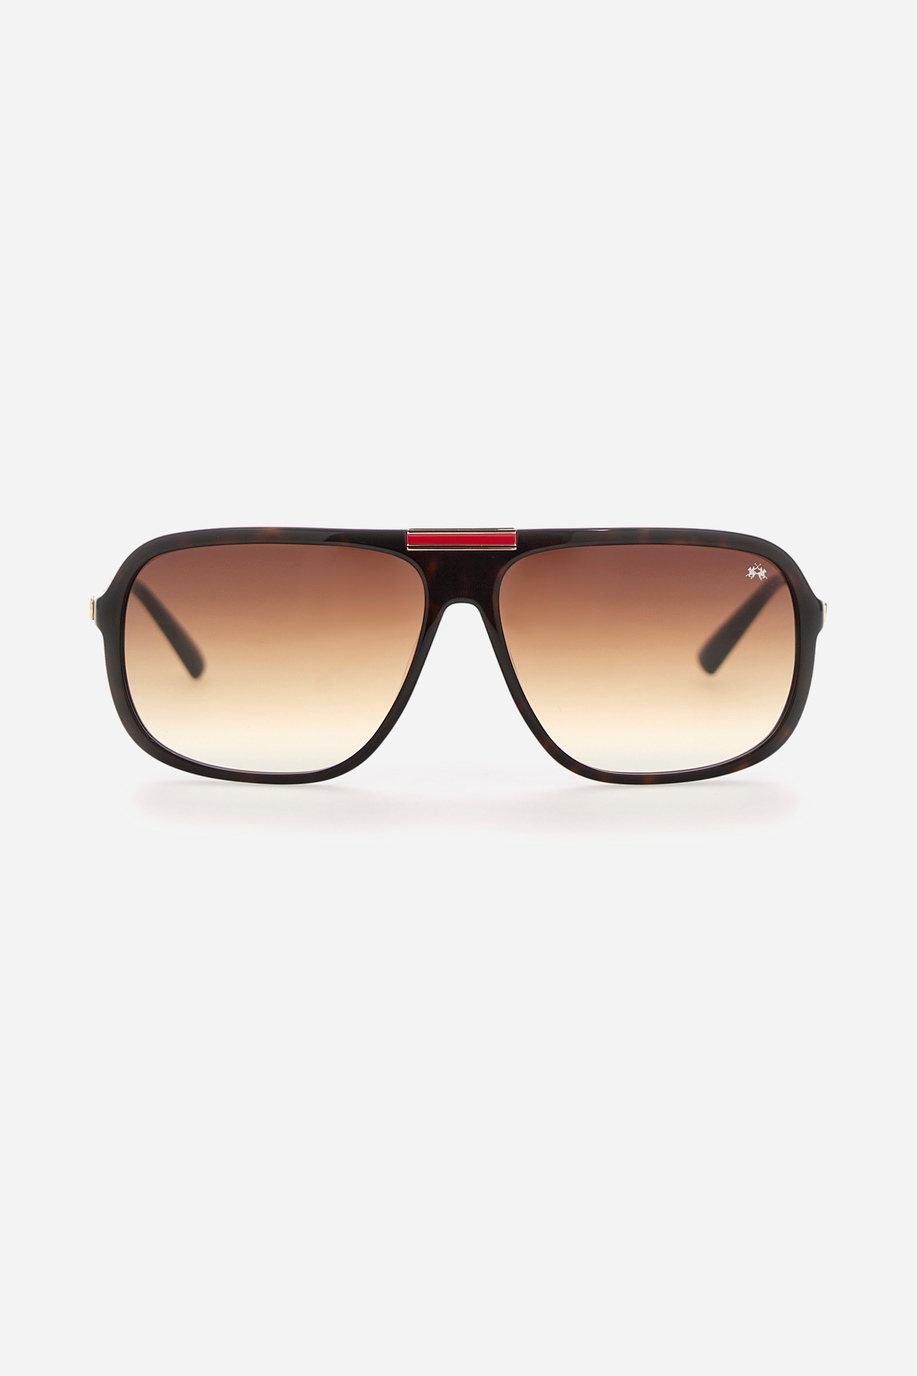 Sunglasses aviator style - Accessories | La Martina - Official Online Shop